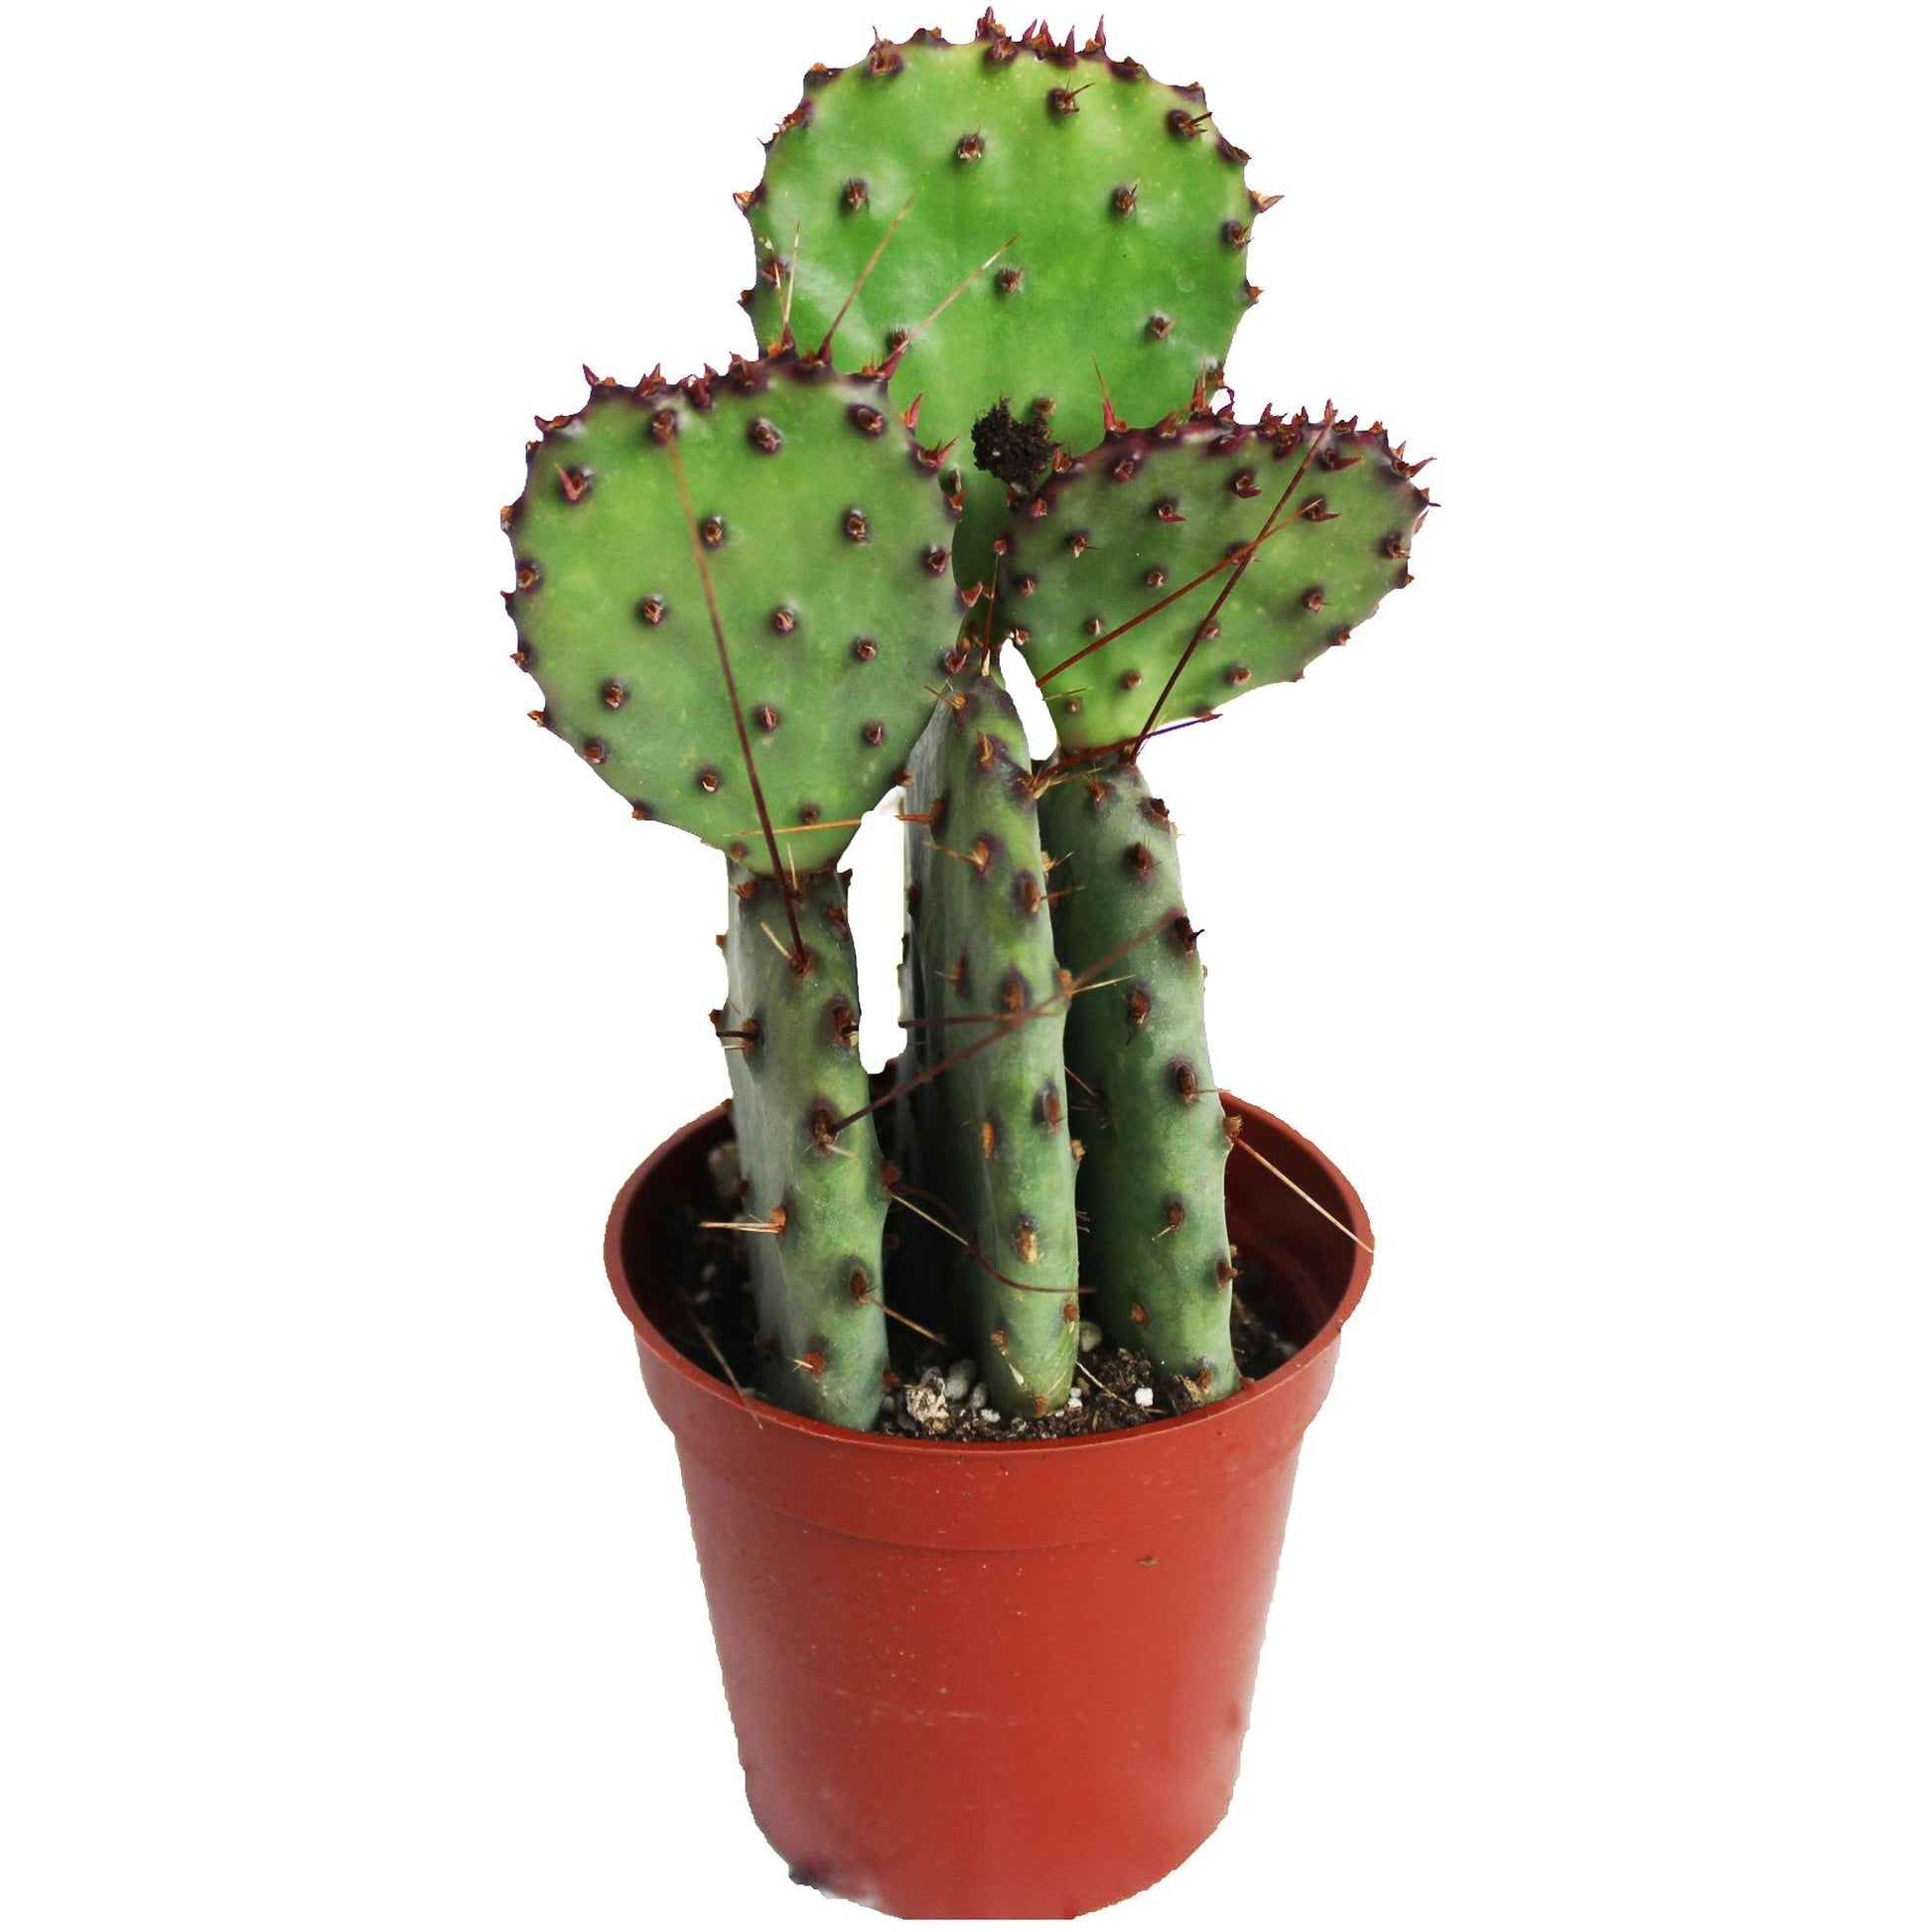 Prickly Pear Cactus 3.5" - Geoponics Inc